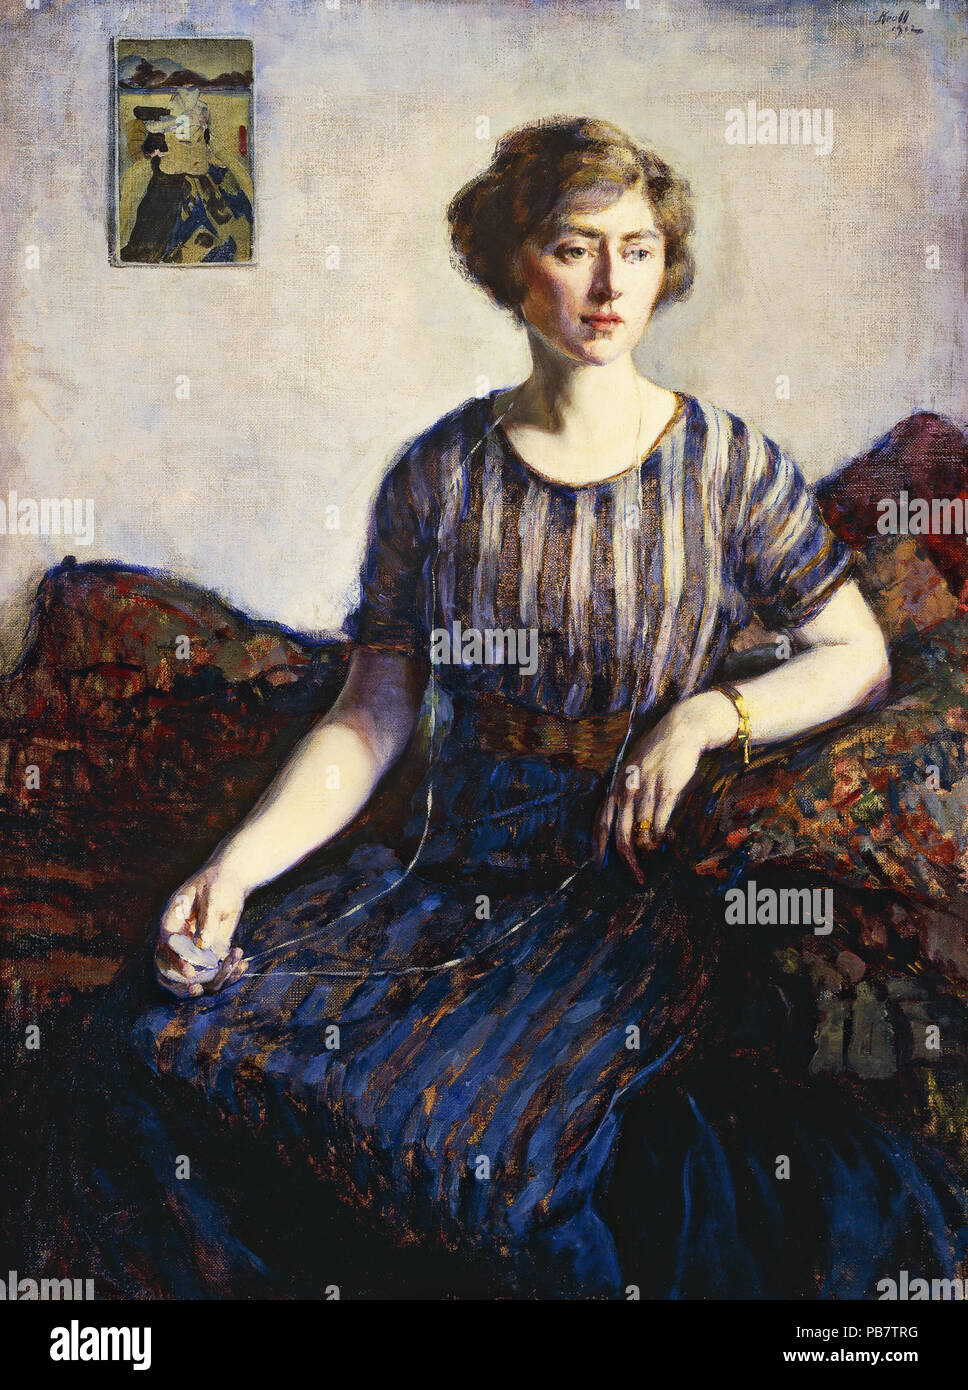 896 Leon Kroll - Tess Kroll Pergament, the Artist's Sister, 1912 Stock Photo